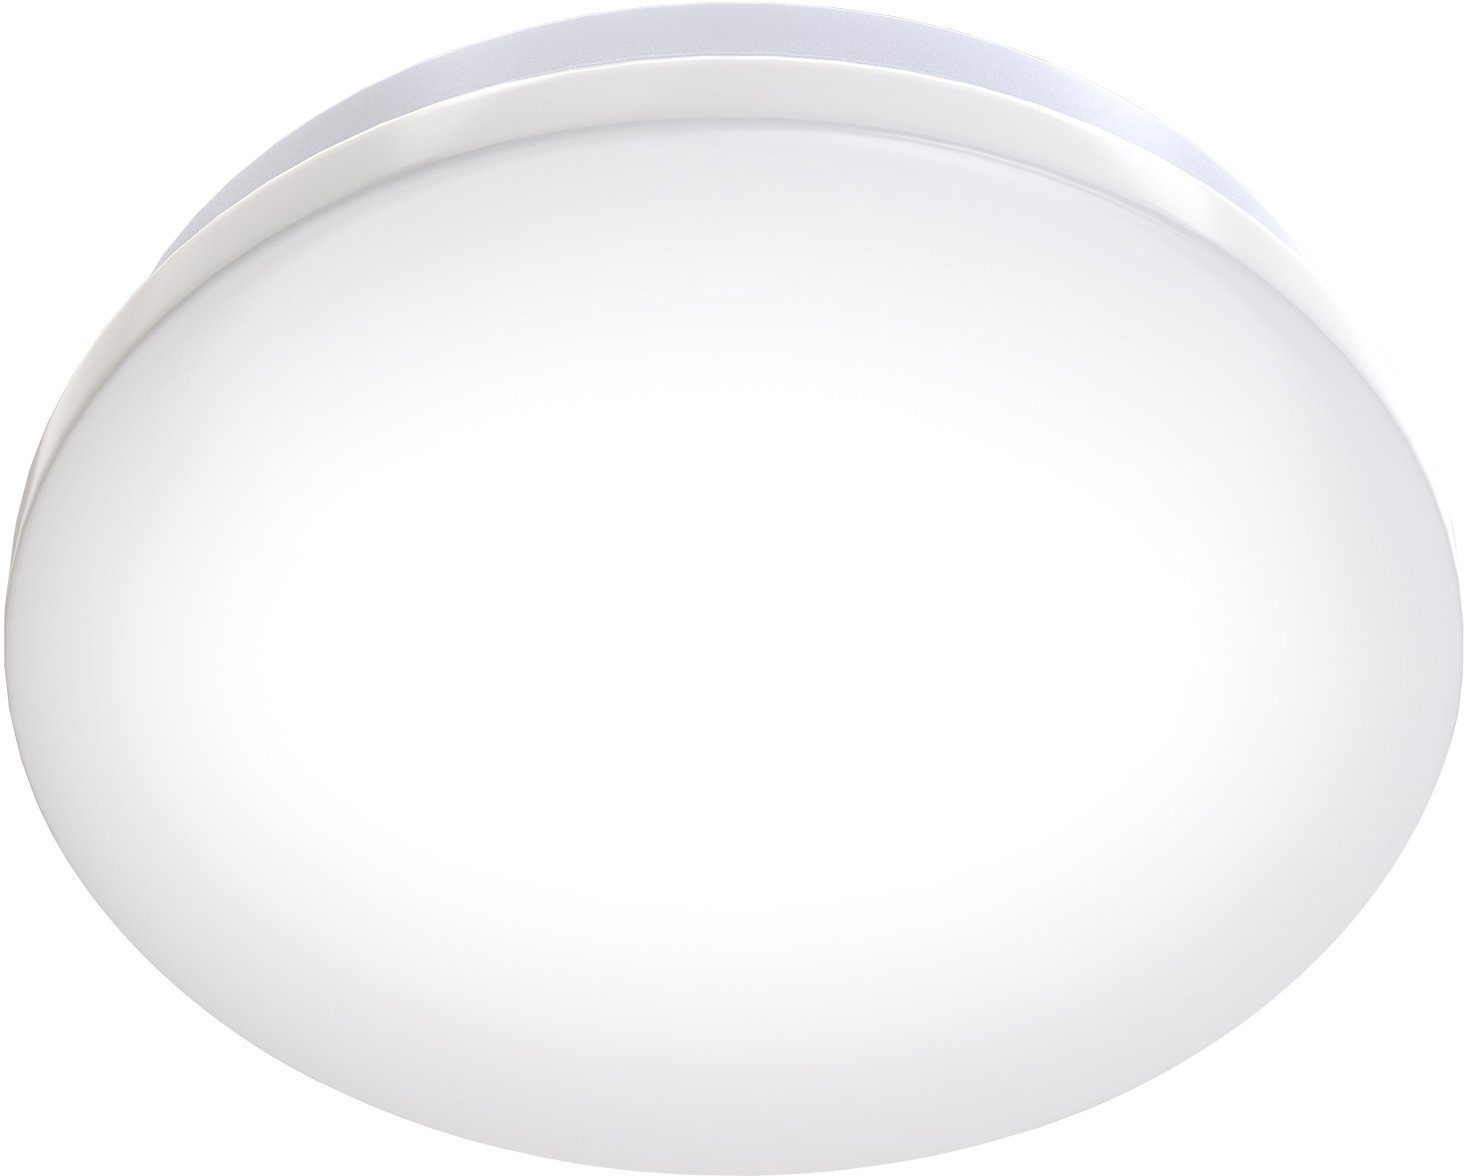 Neutralweiß, LED flach, B.K.Licht Watt Deckenlampe, 4000K, Bad, Deckenleuchte, LED 12 integriert, inkl. LED weiß Modul fest 1200lm